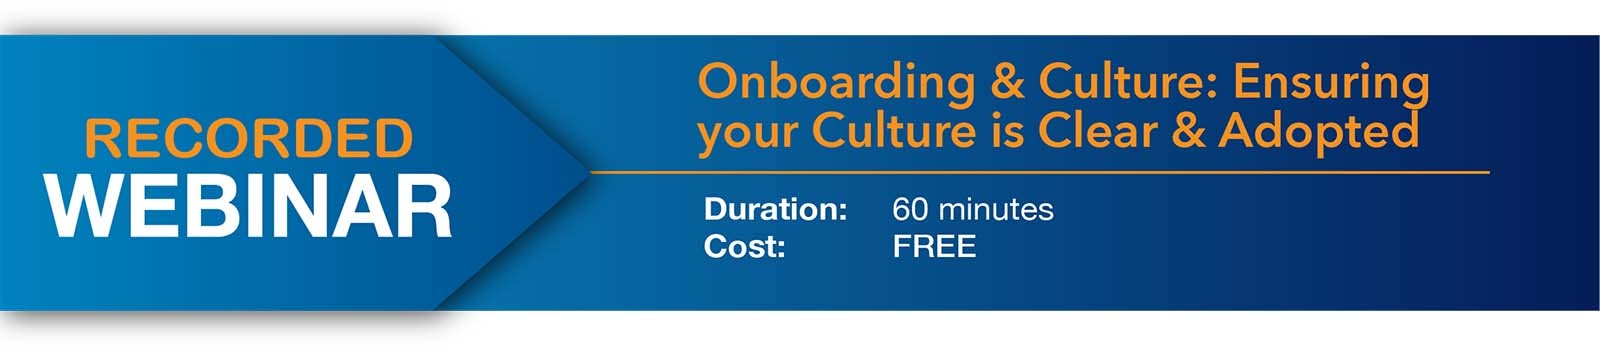 Onboarding & Culture